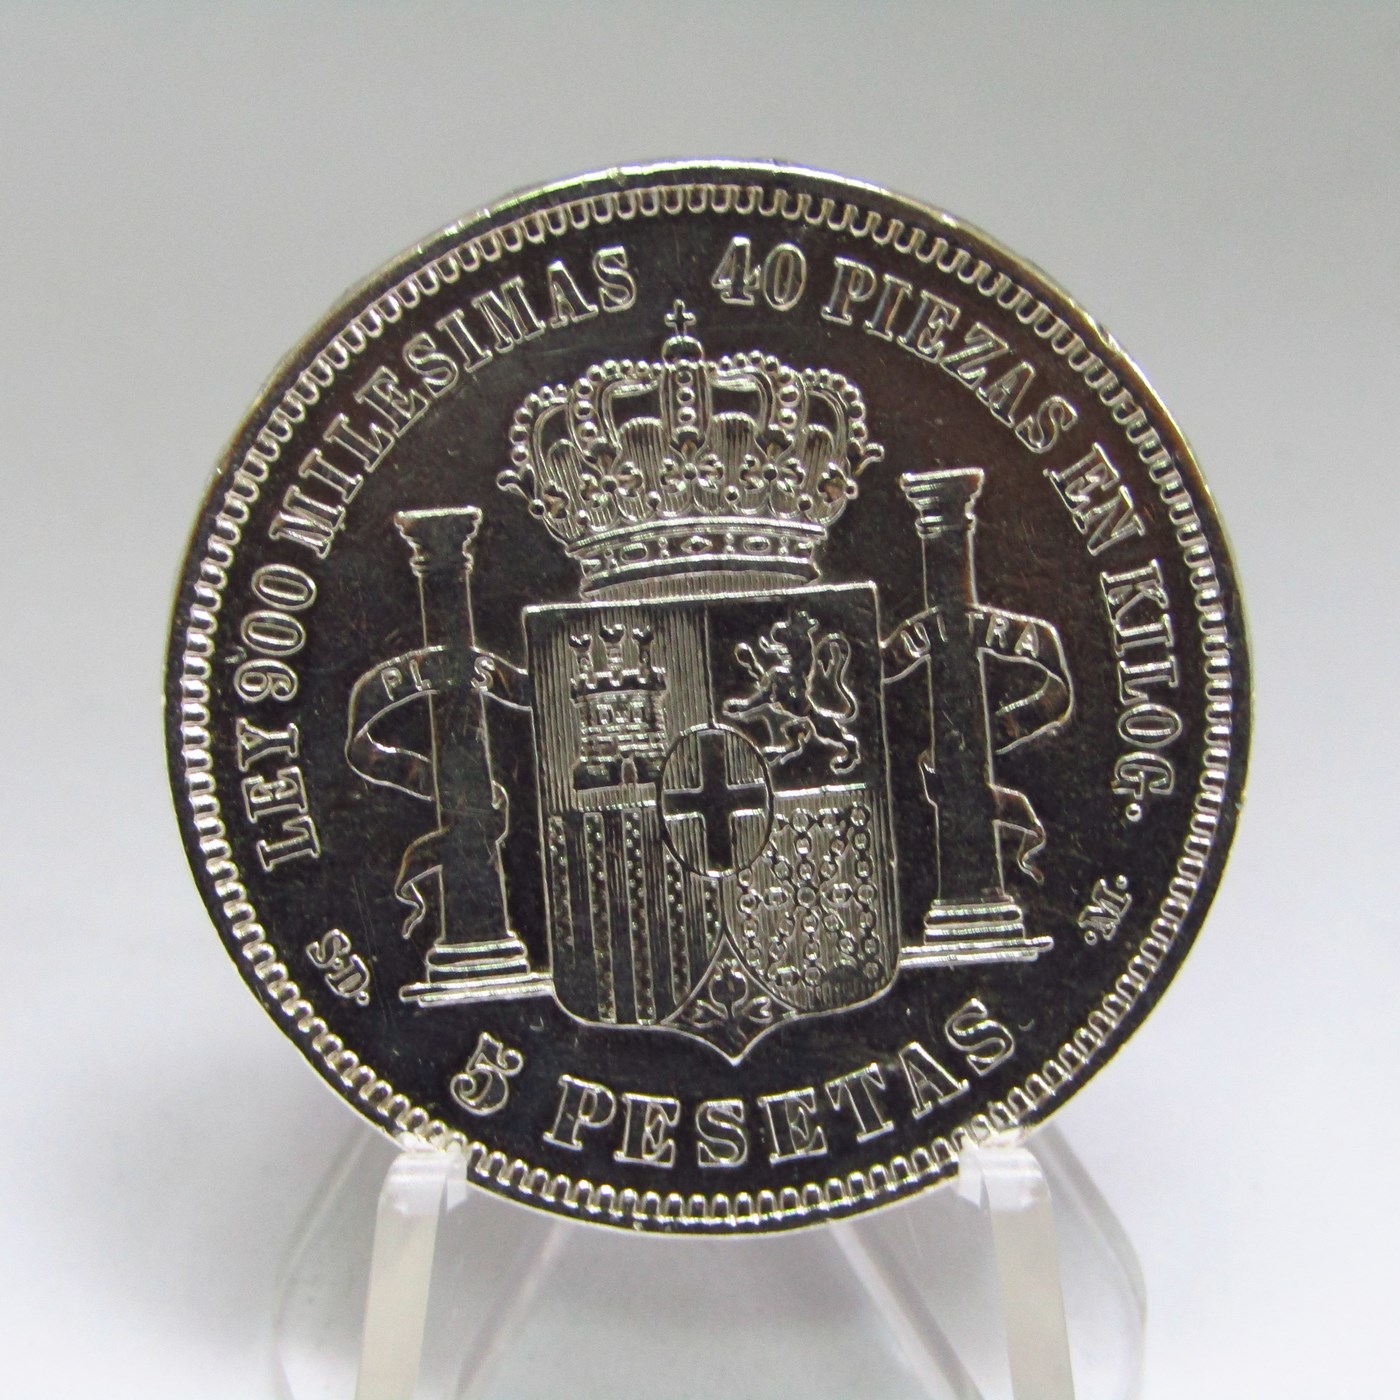 Moneda de 5 pesetas de PLATA. Año 1871 SD M. EBC.